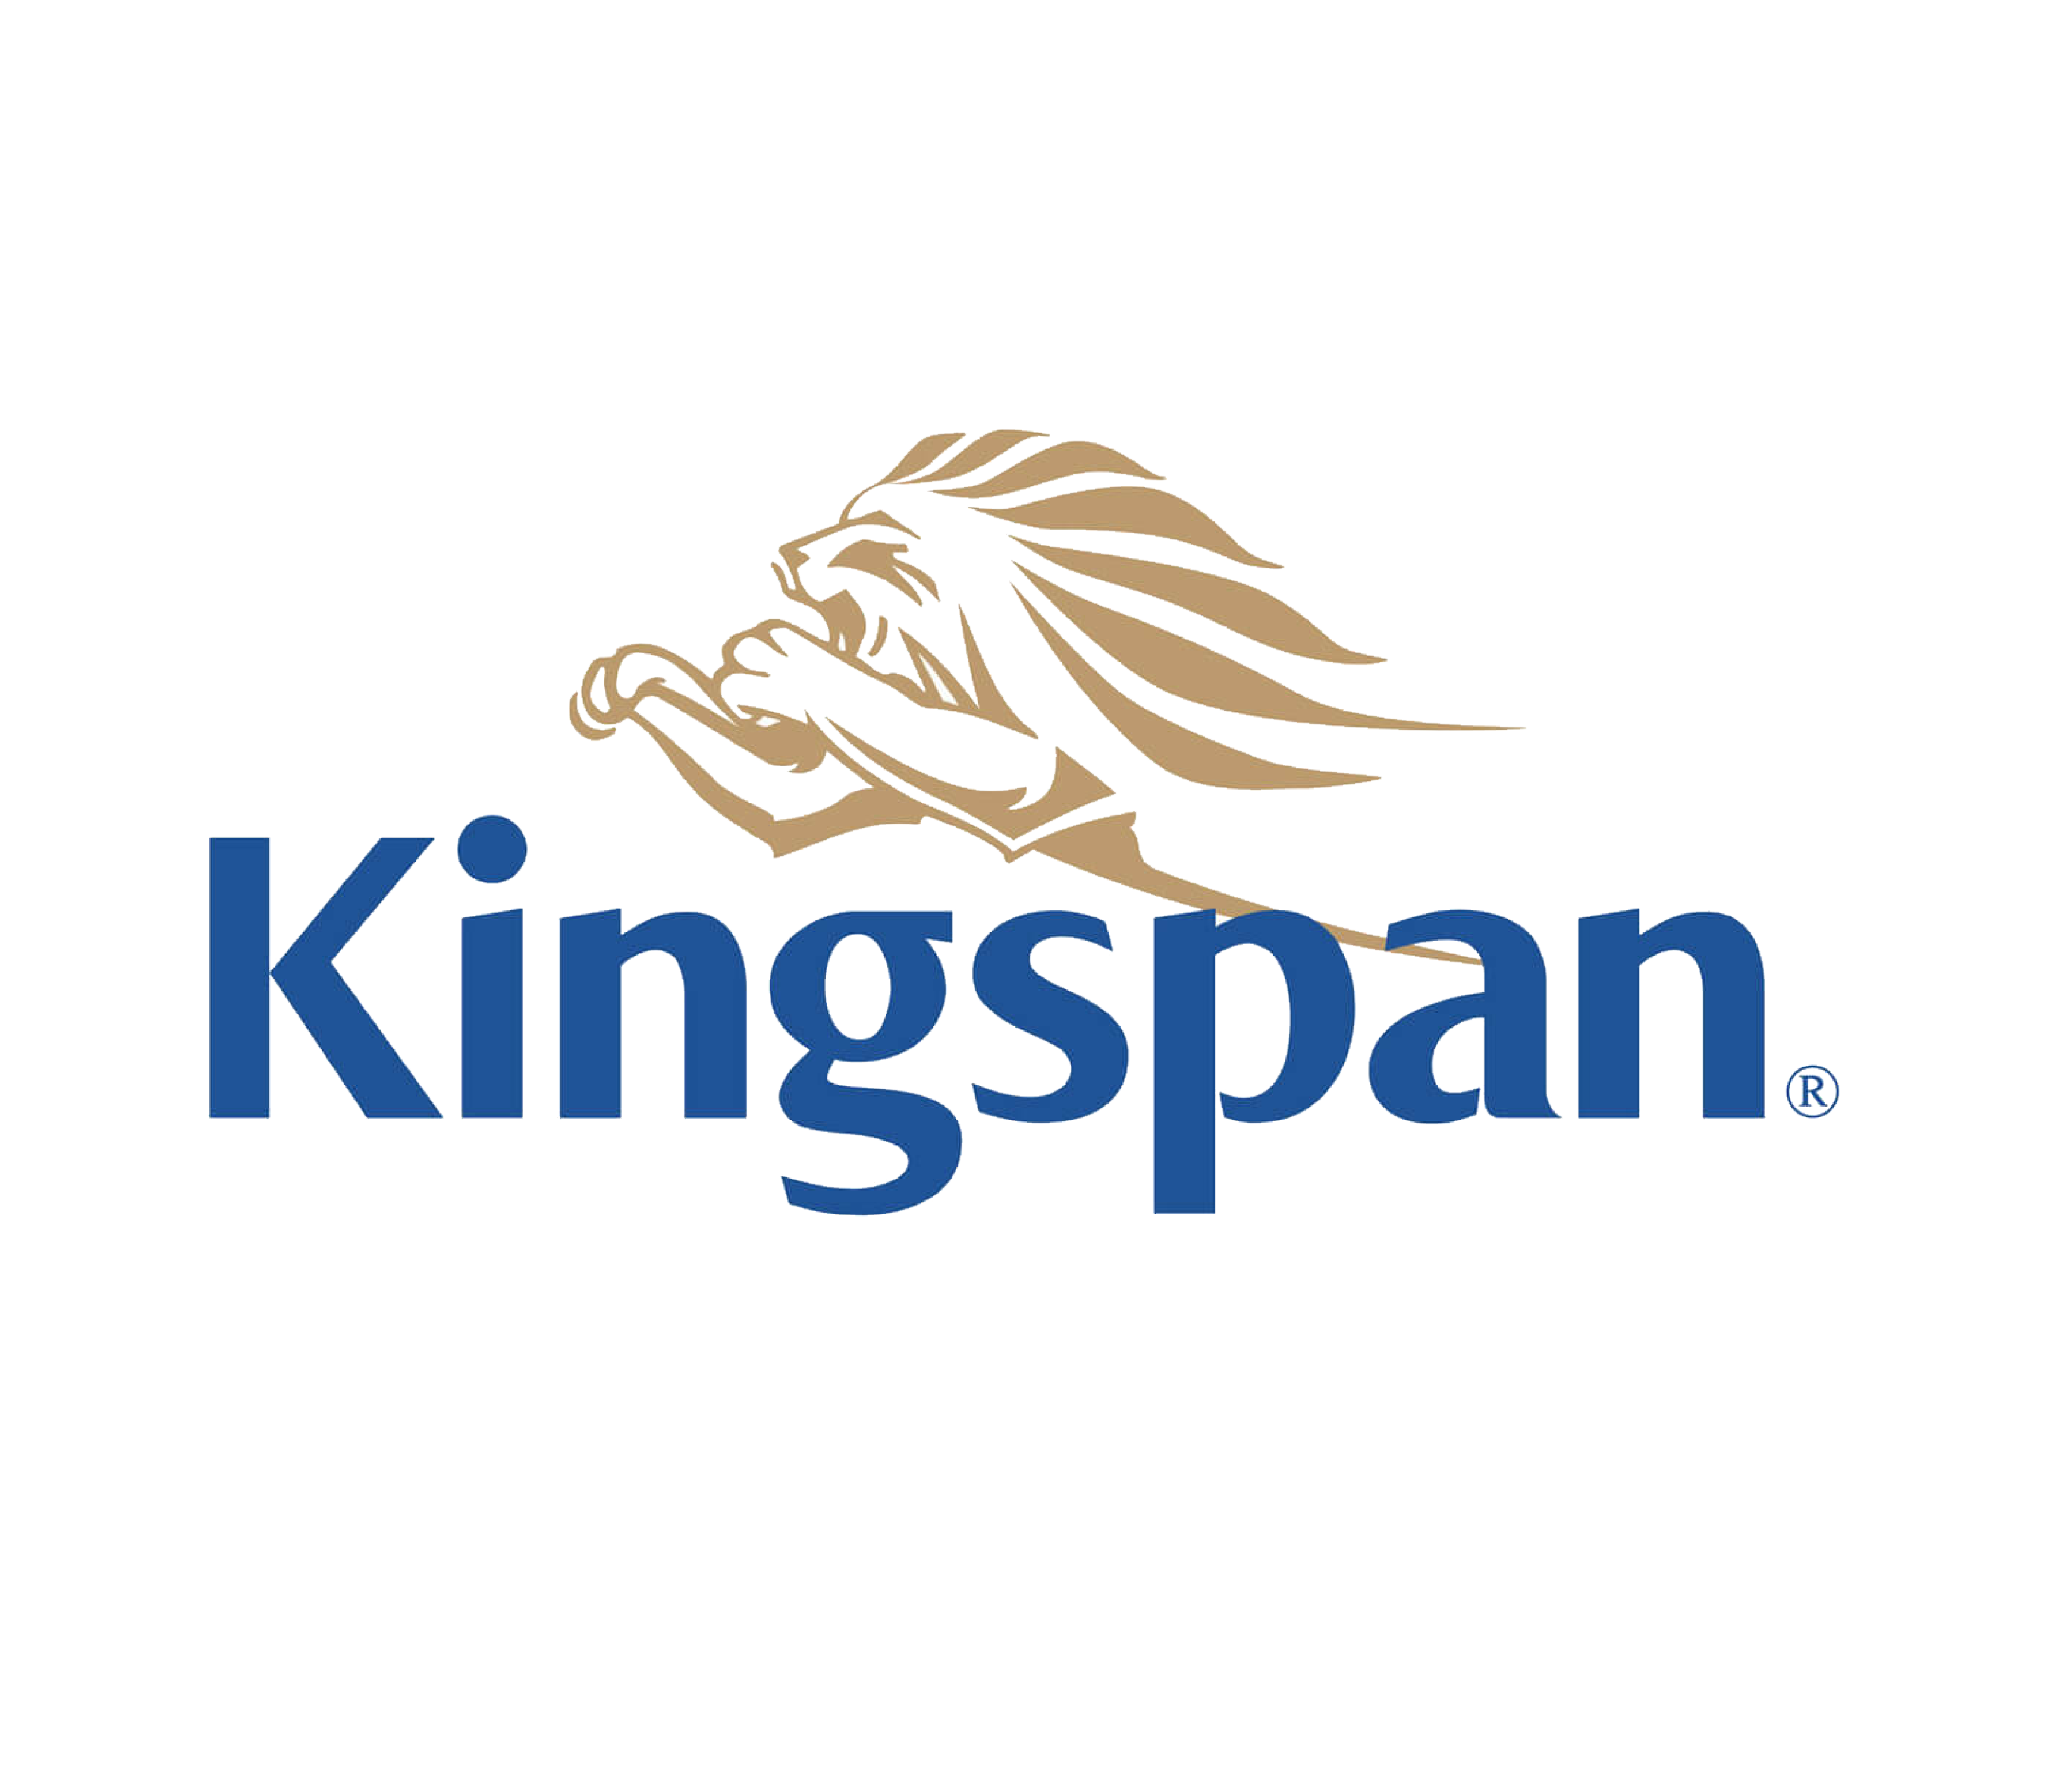 Kingspan Insulation ApS